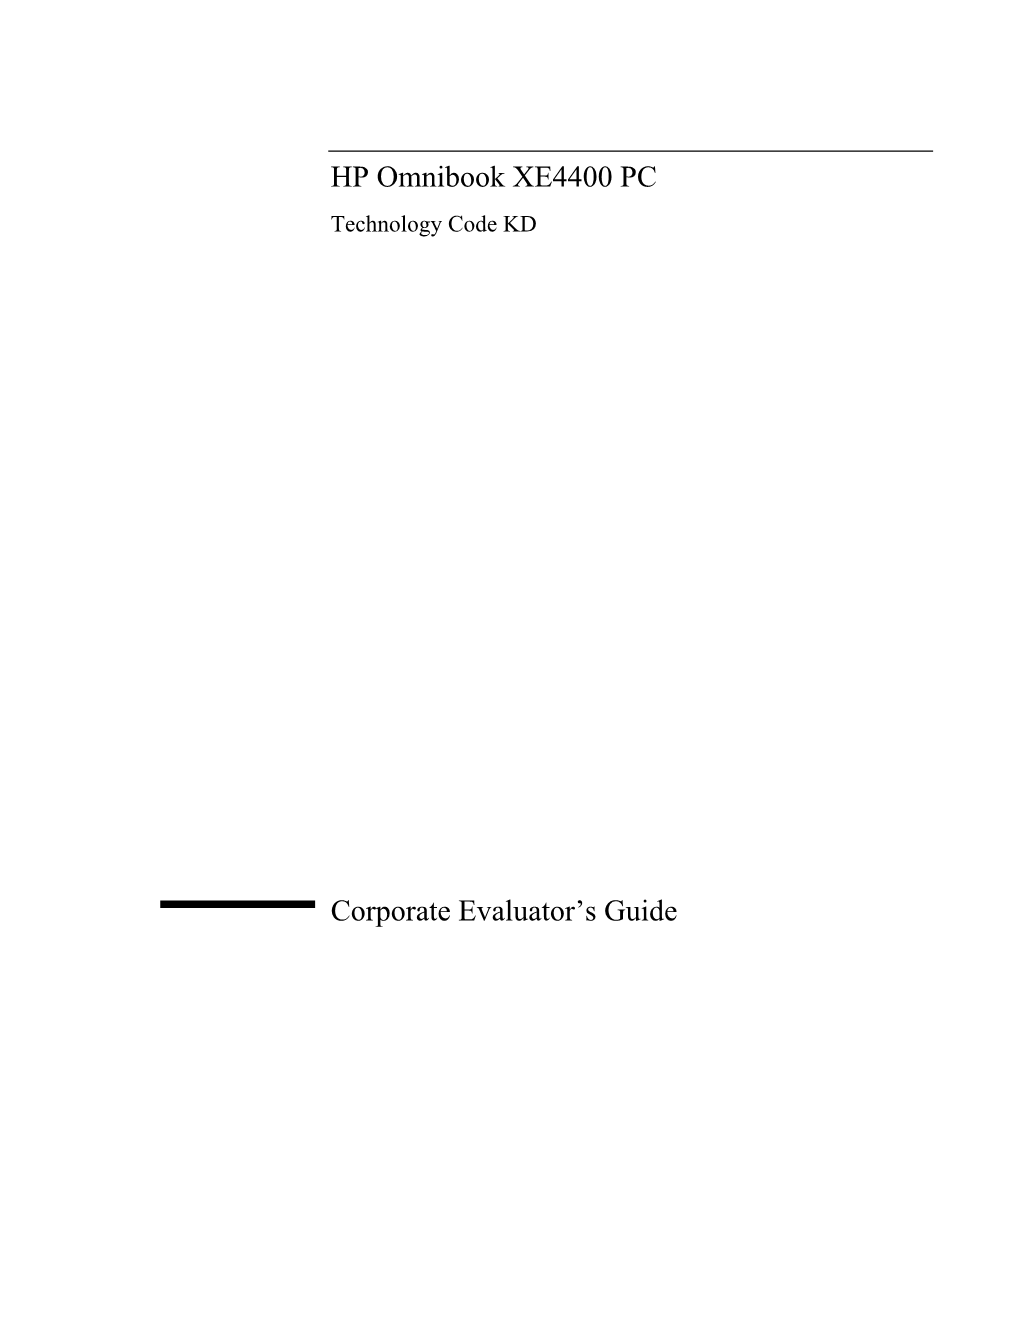 HP Omnibook XE4400 PC Corporate Evaluator's Guide